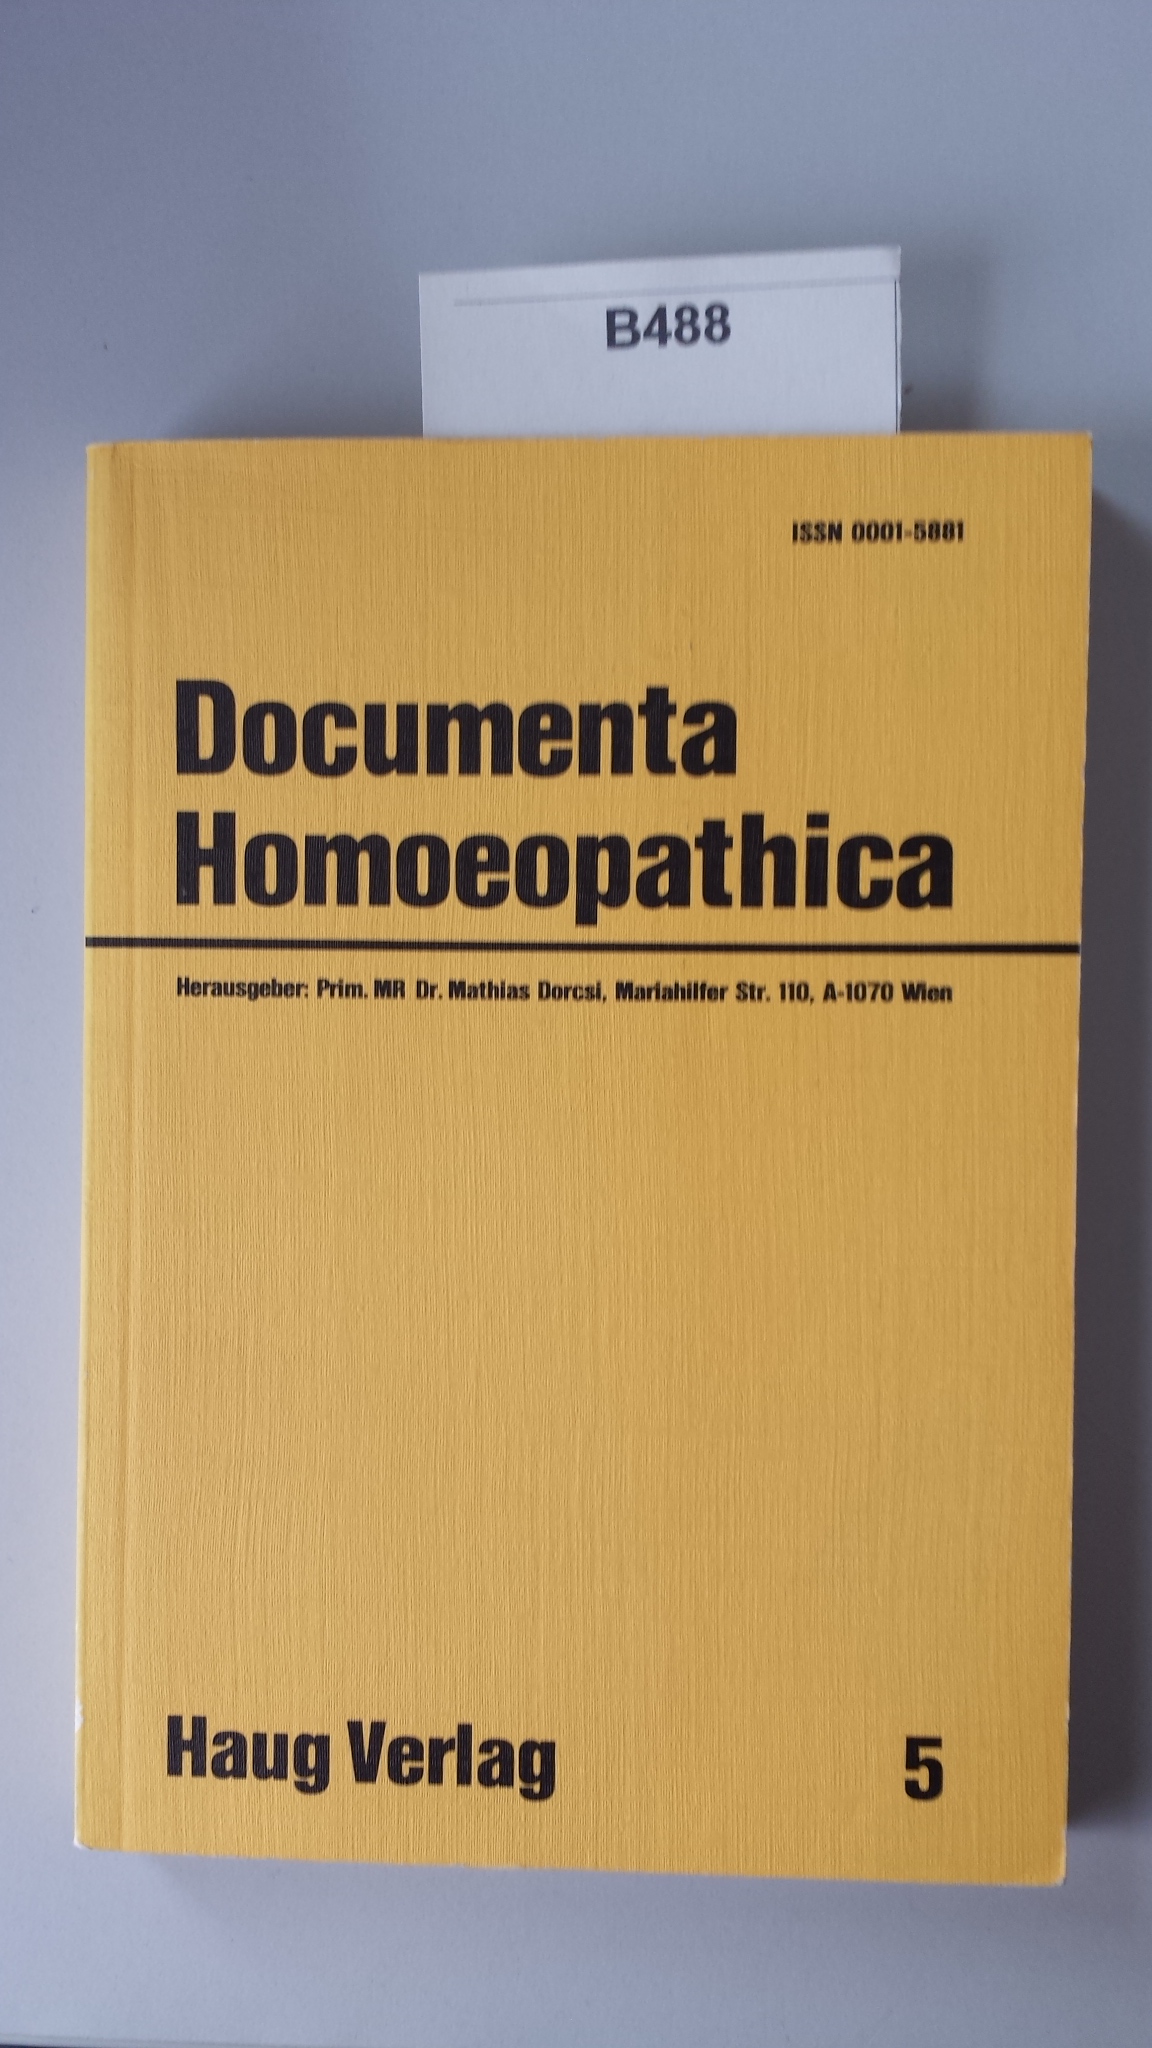 Buch: B488 Documenta Homoeopathica 5